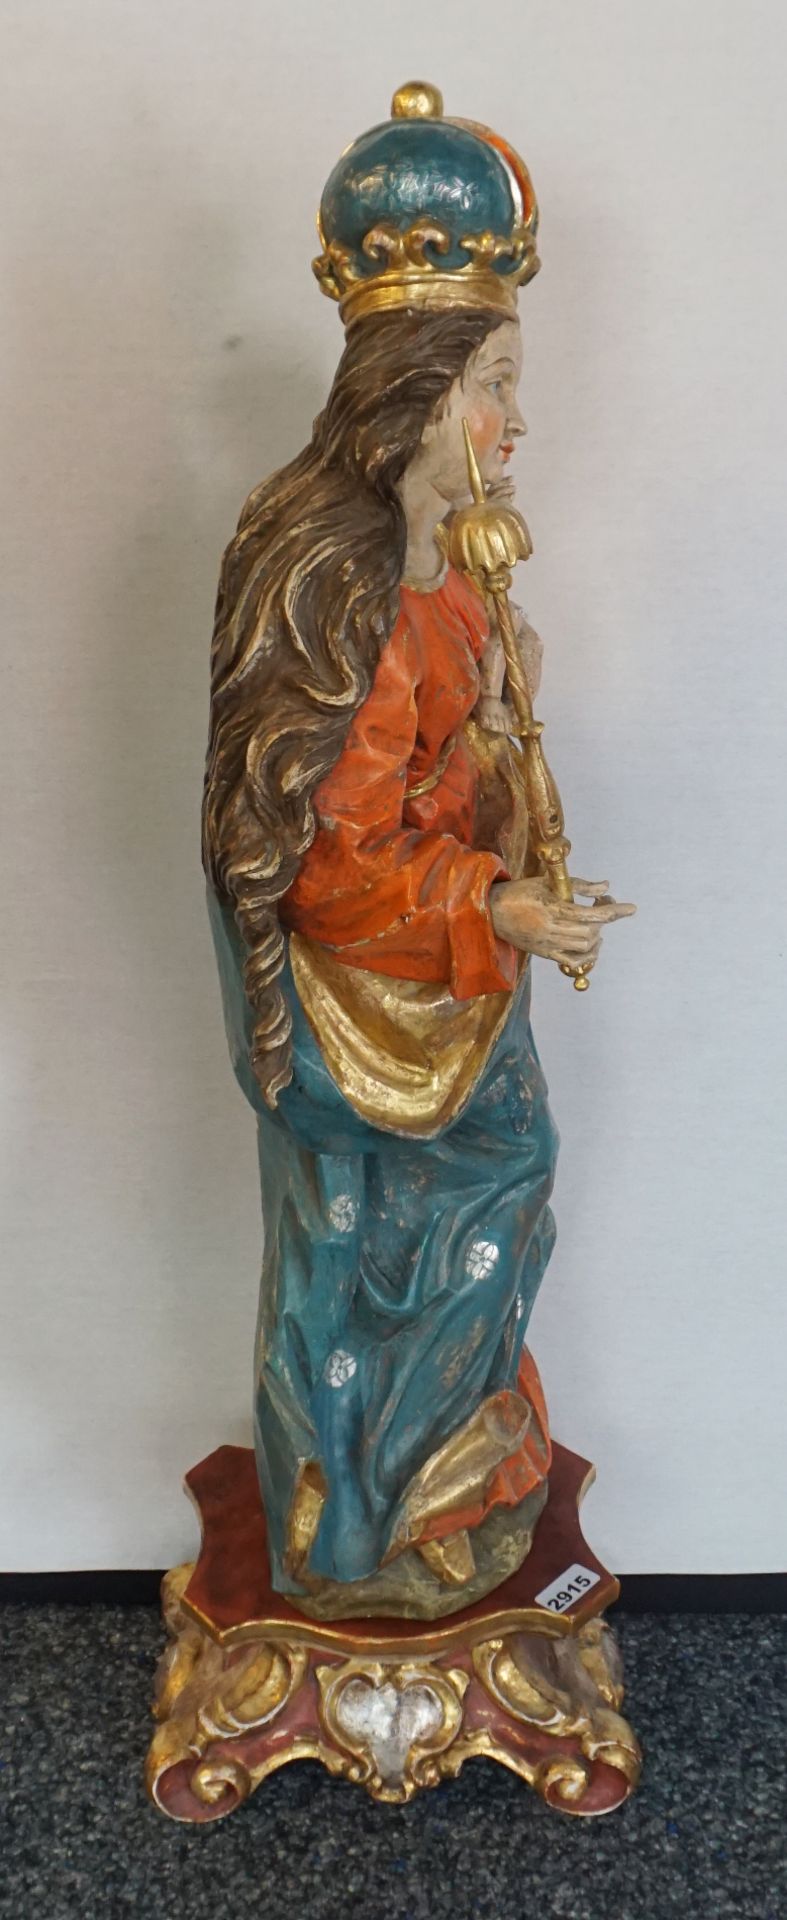 1 Holzfigur 20. Jh. wohl EICH, Oberammergau "Madonna mit Kind" ca. H 92cm, Sockel H ca. 16cm, - Image 2 of 5